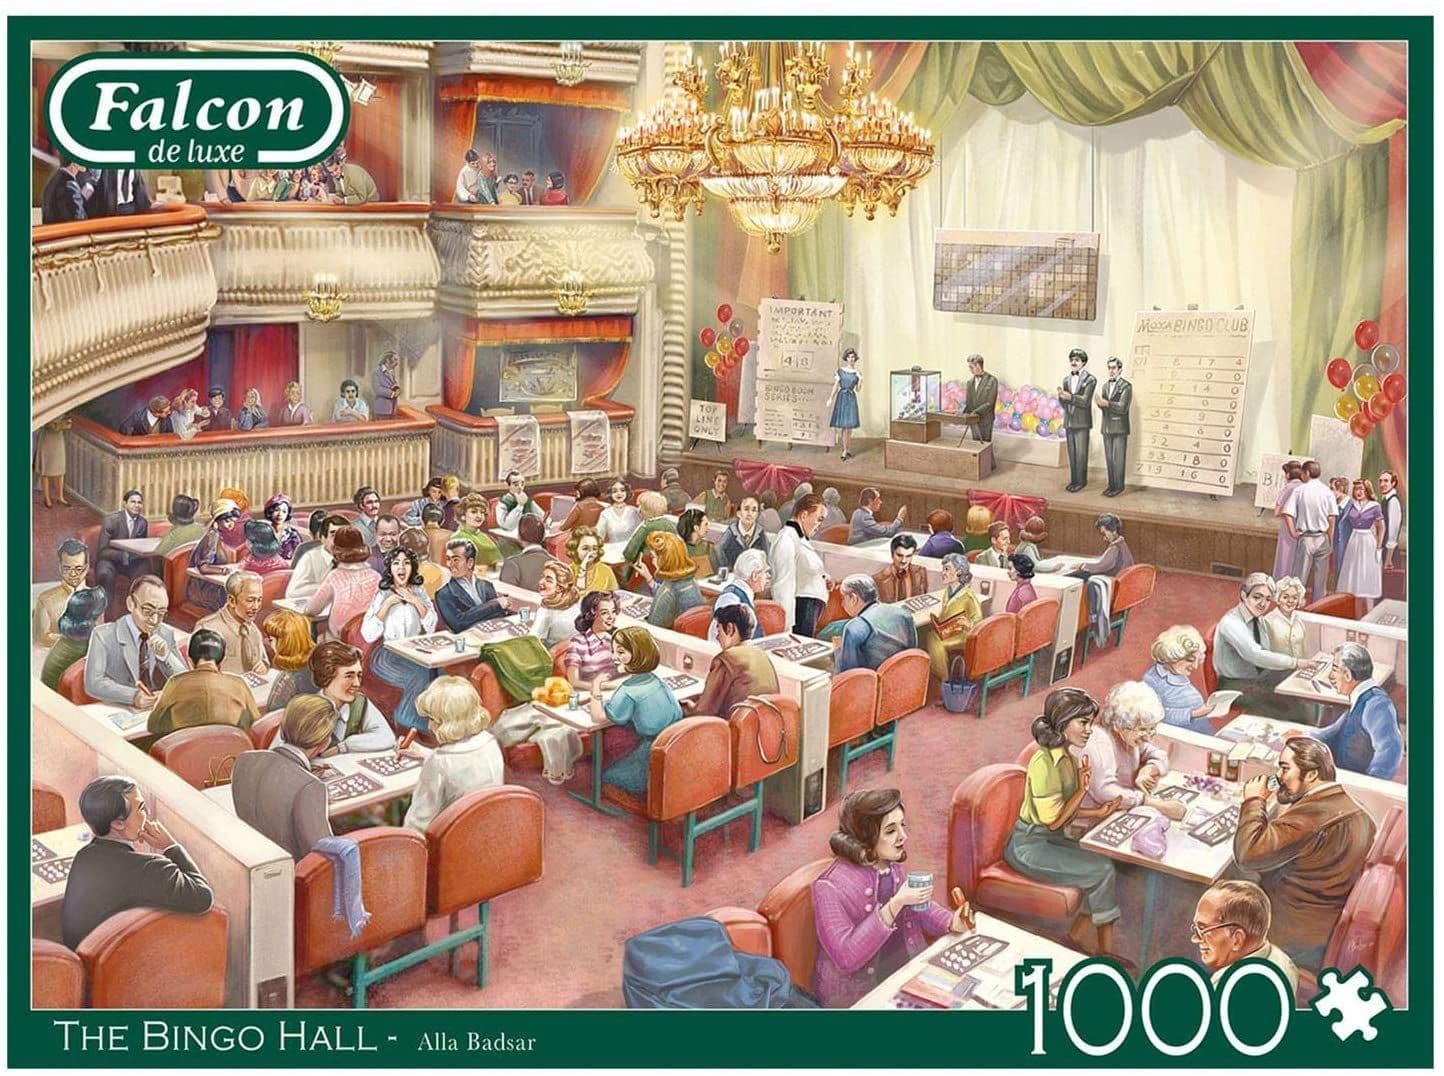 Falcon de luxe - The Bingo Hall - 1000 Piece Jigsaw Puzzle